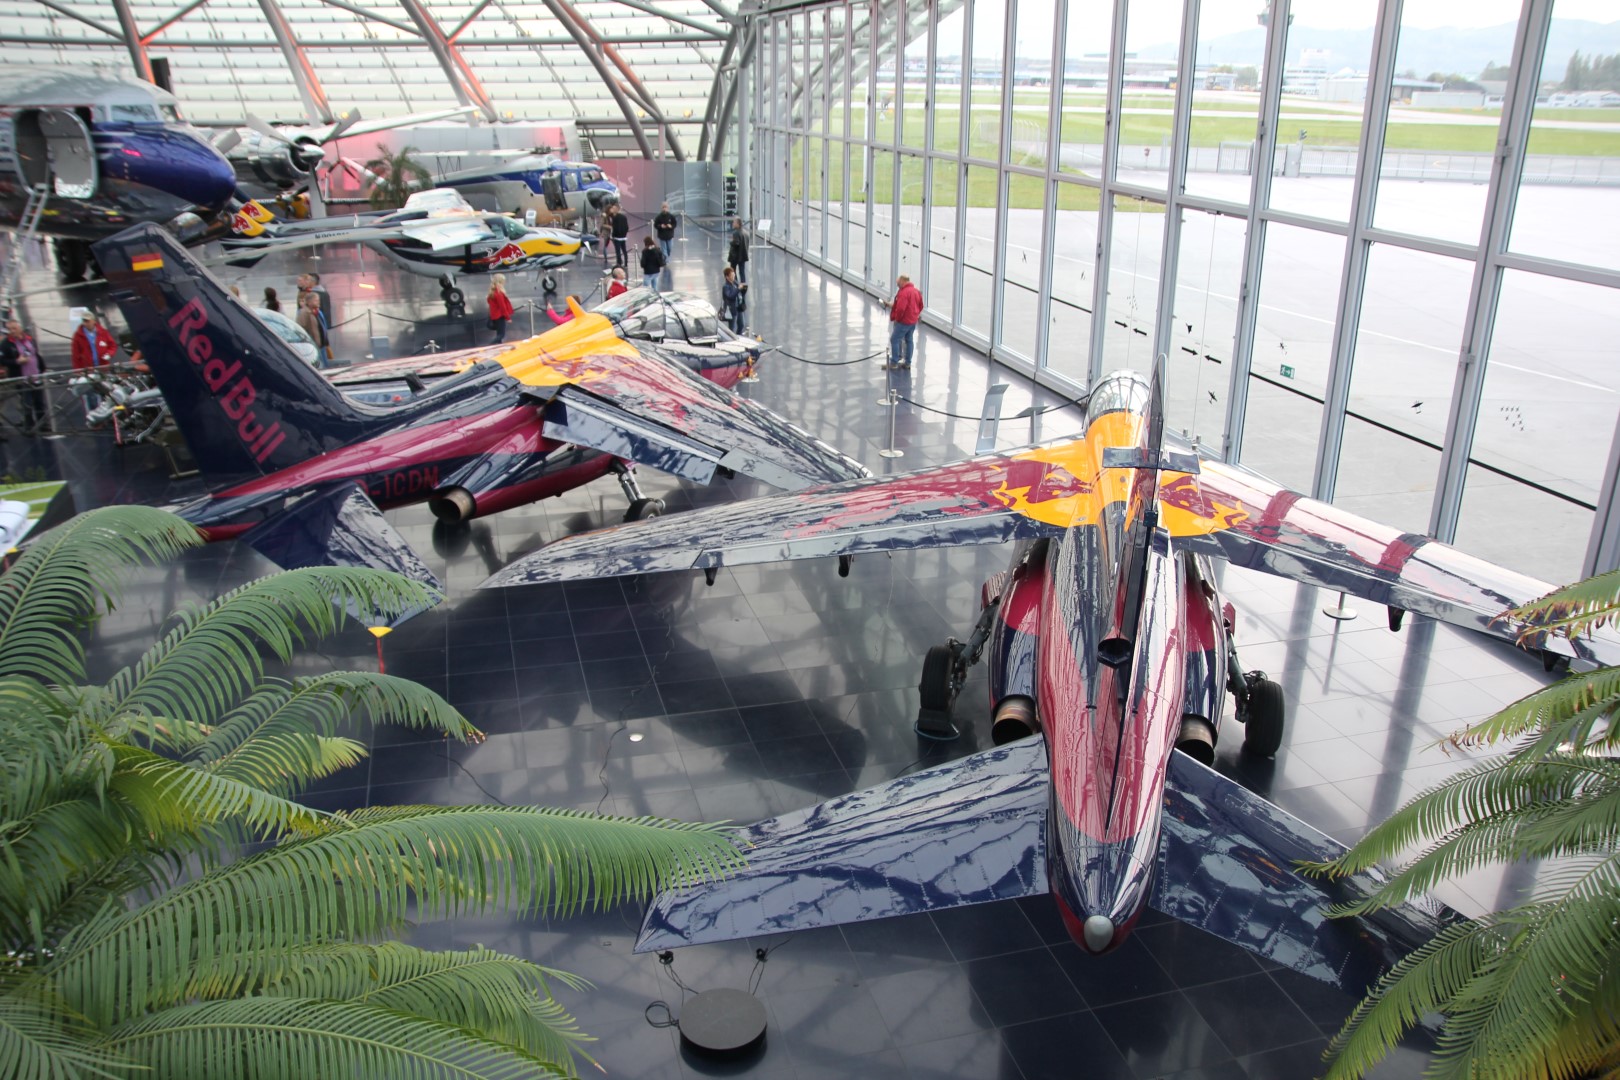 2015-10-17 Besuch Classic Expo und Hangar 7